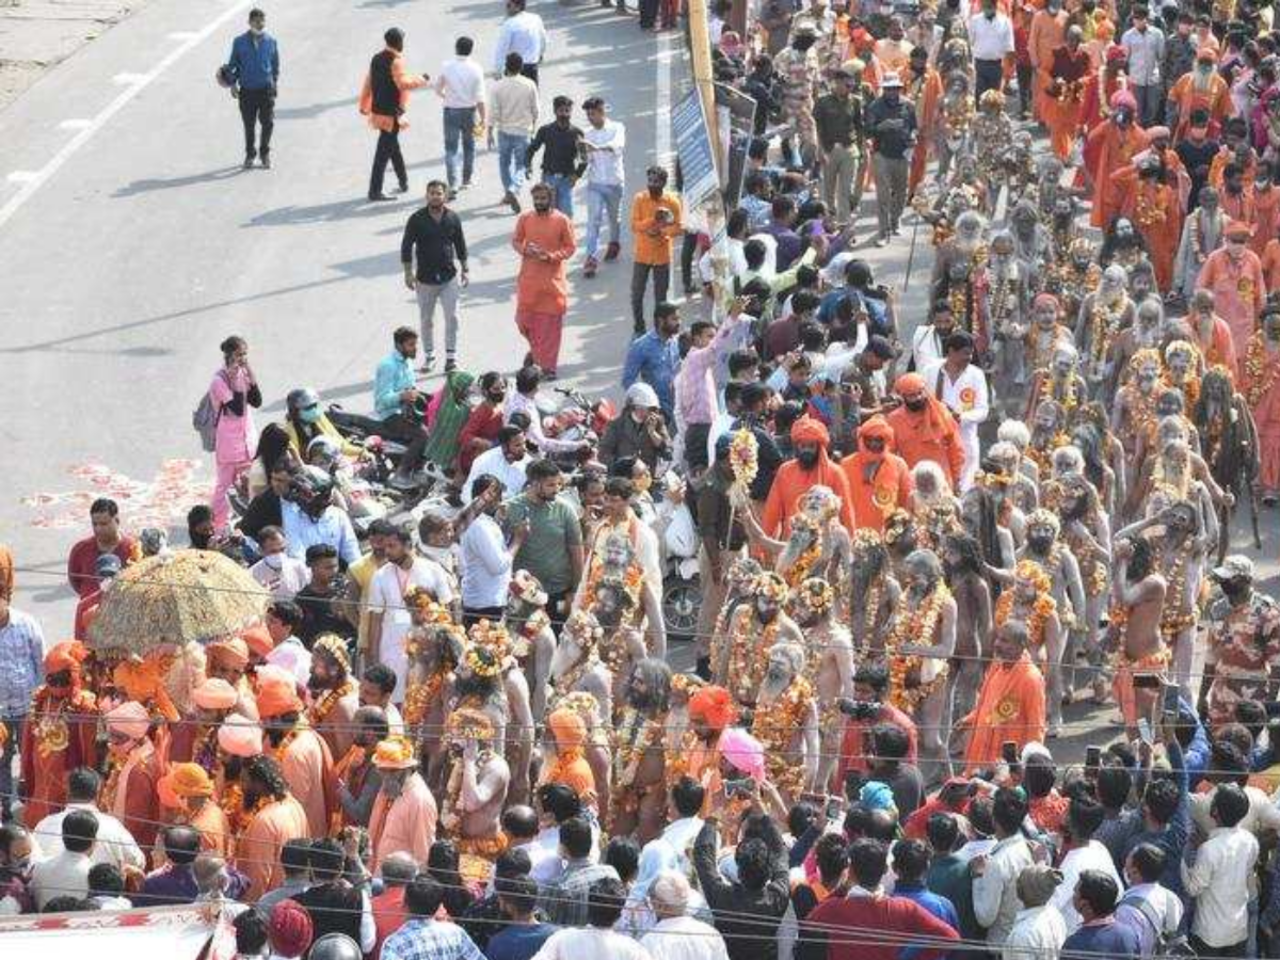 Over 1,000 will take deeksha to become Naga sadhus during Kumbh on April 5 Dehradun News pic picture